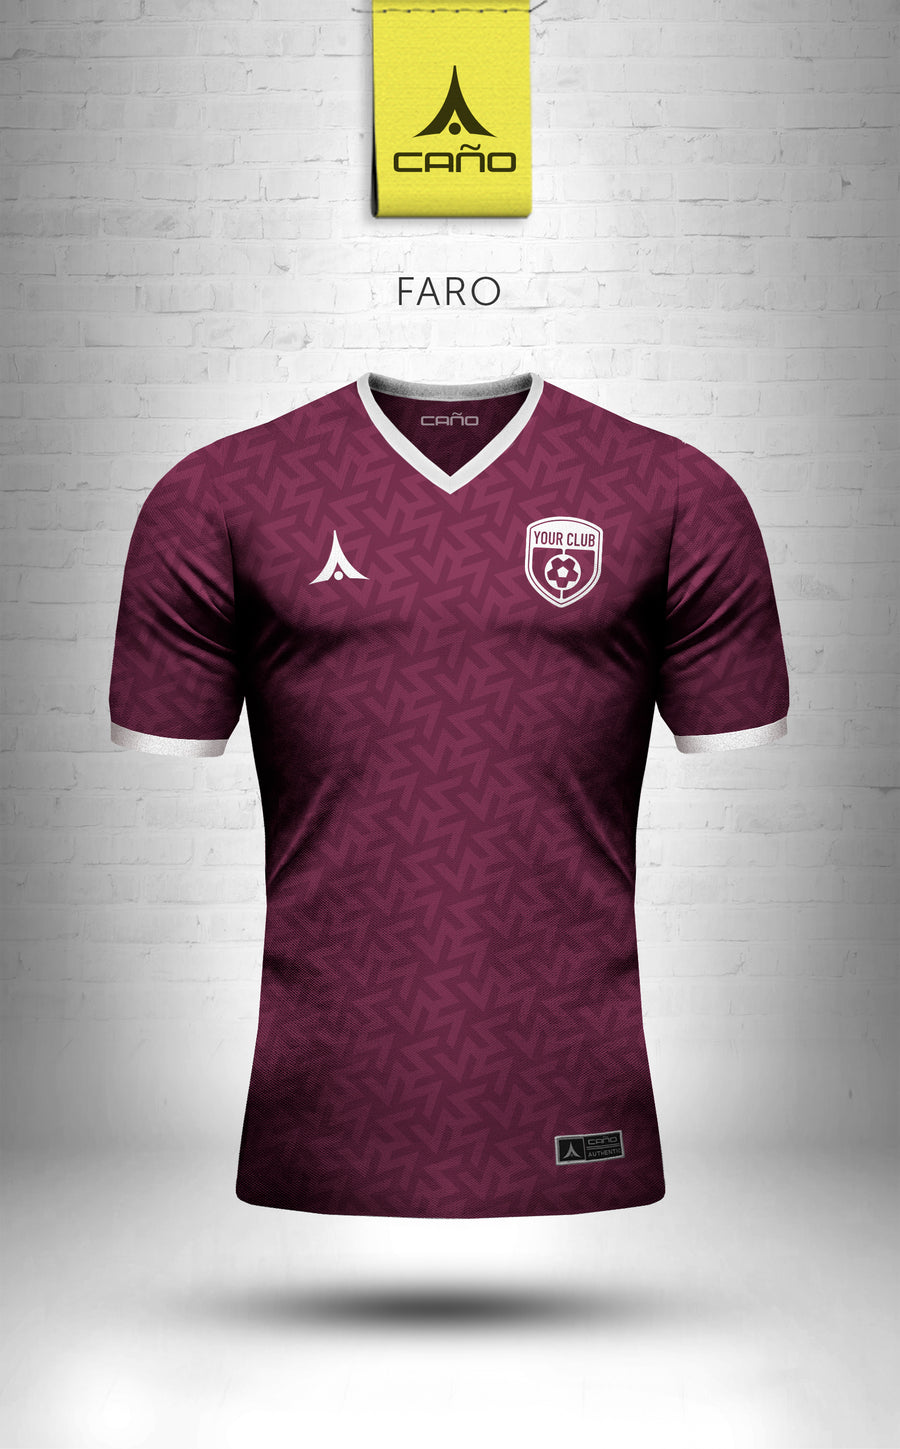 Faro in maroon/white